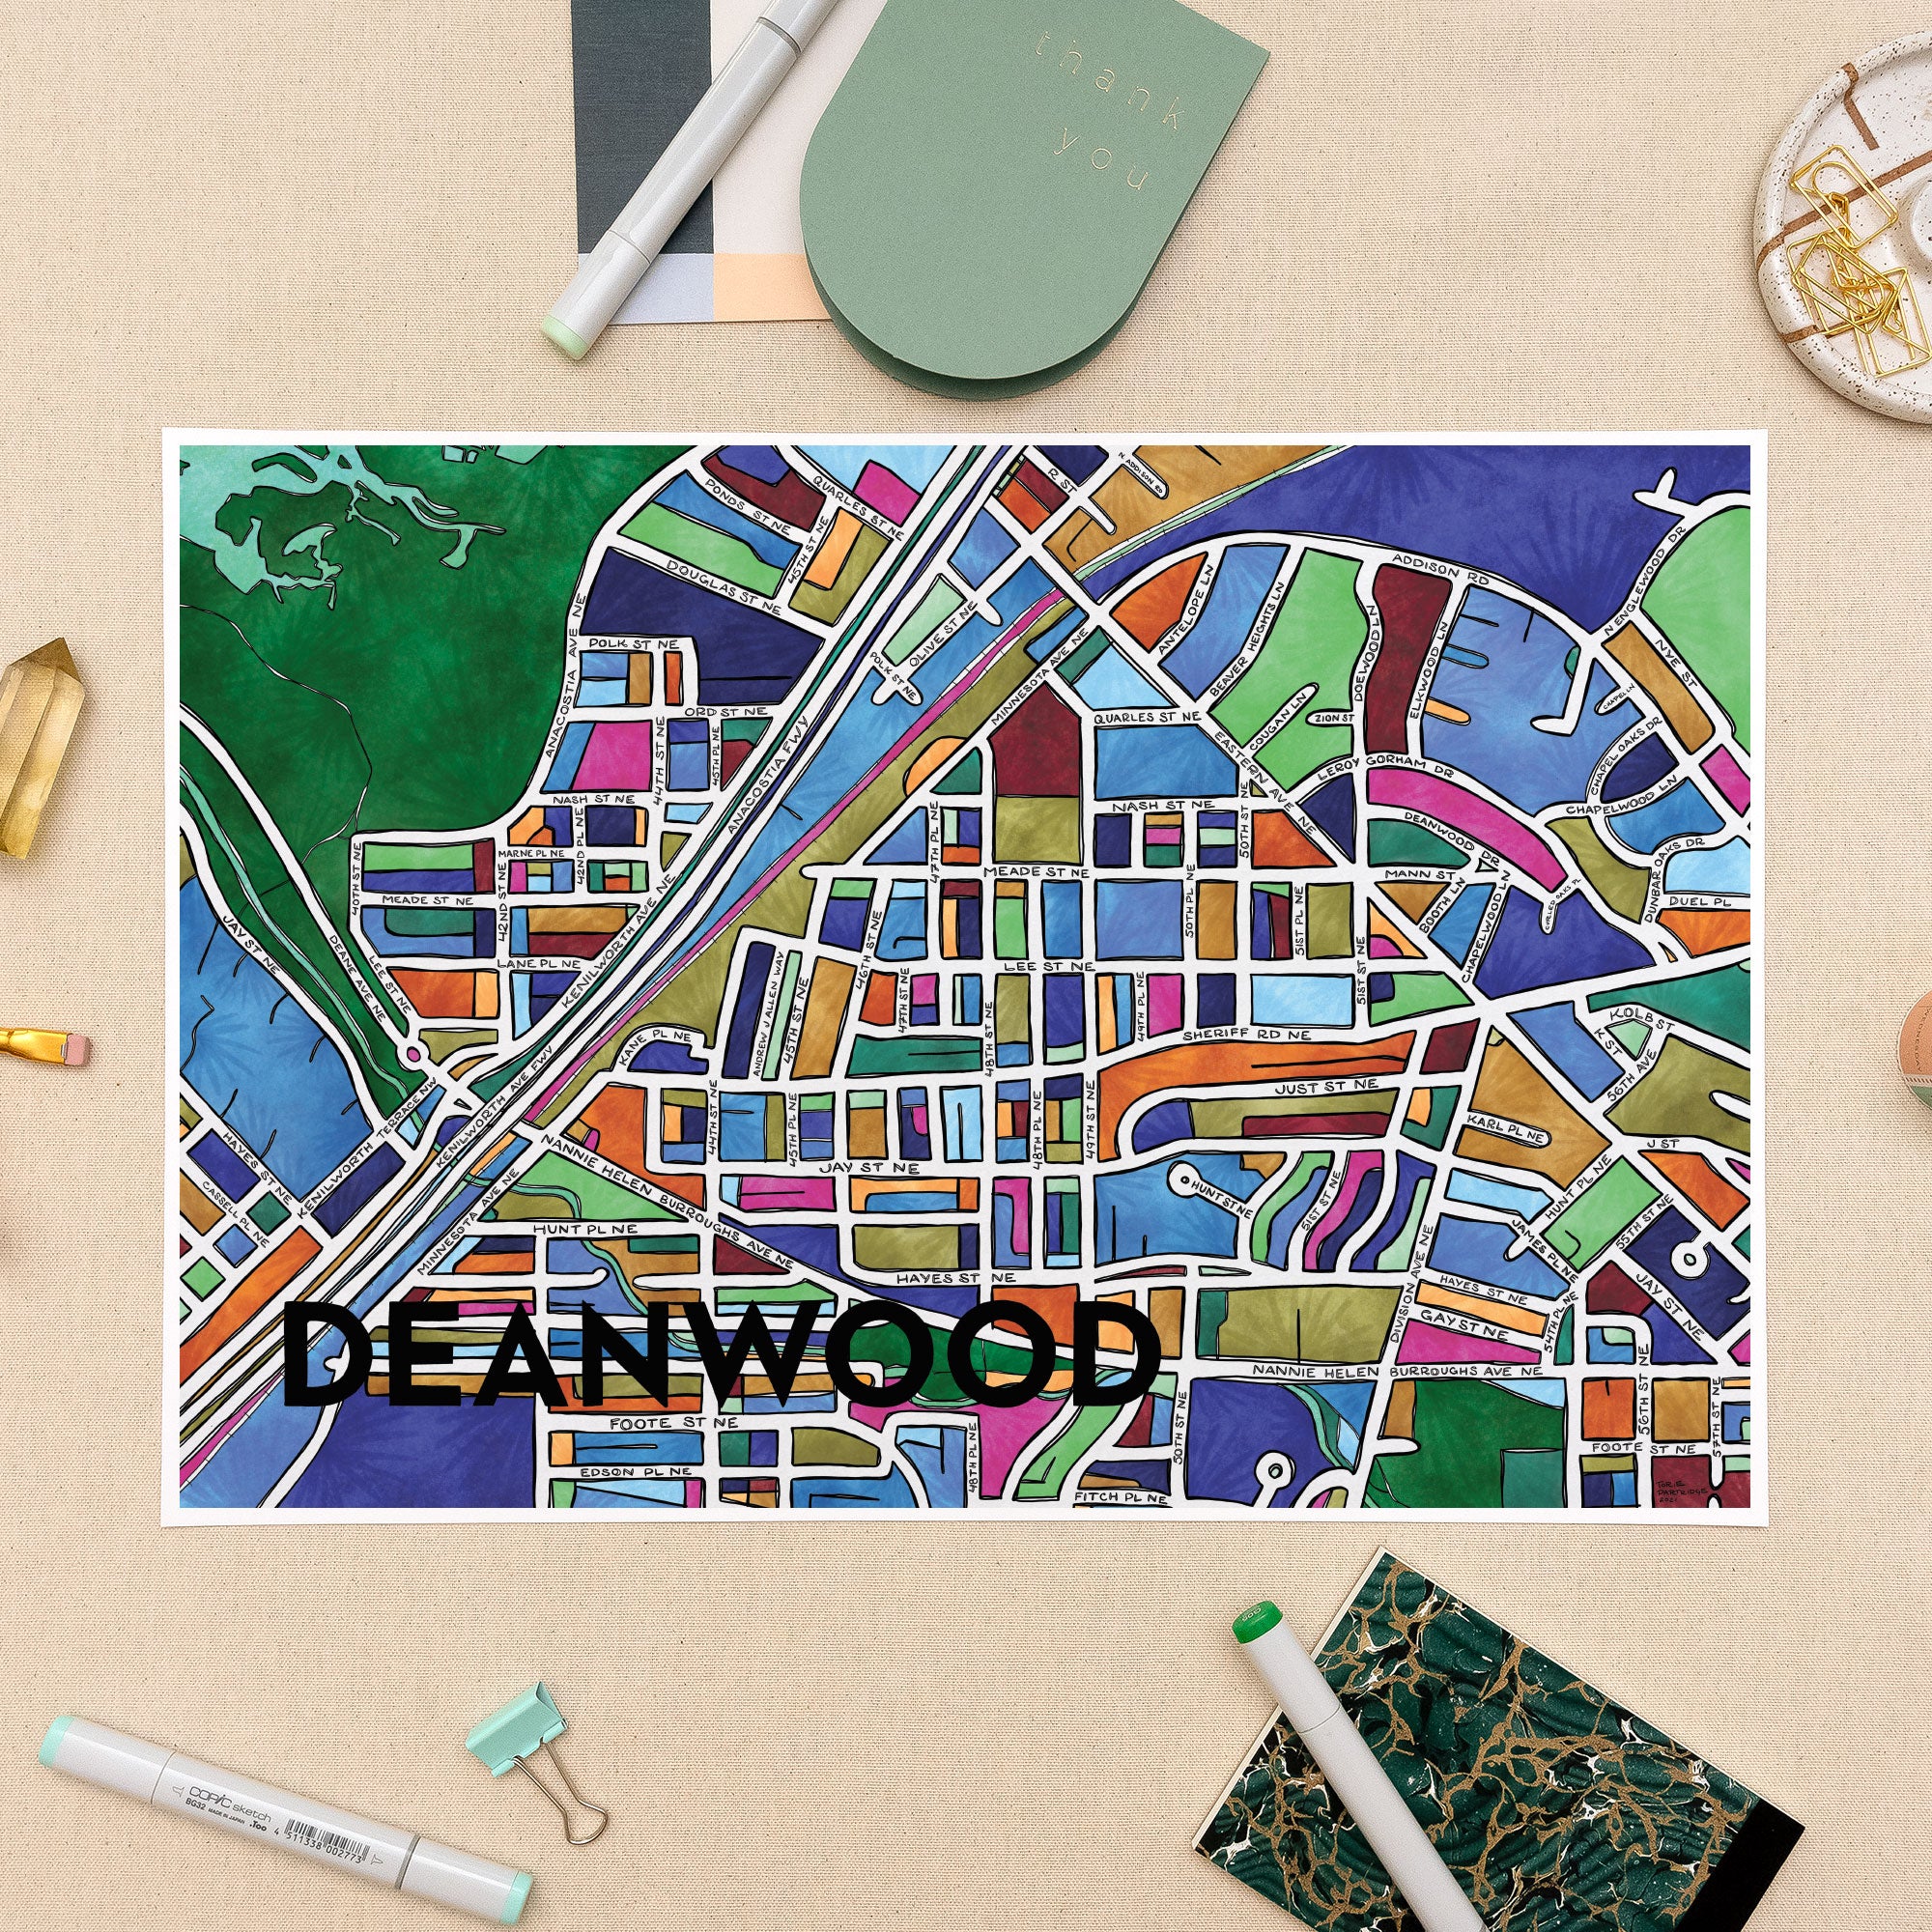 Deanwood Print